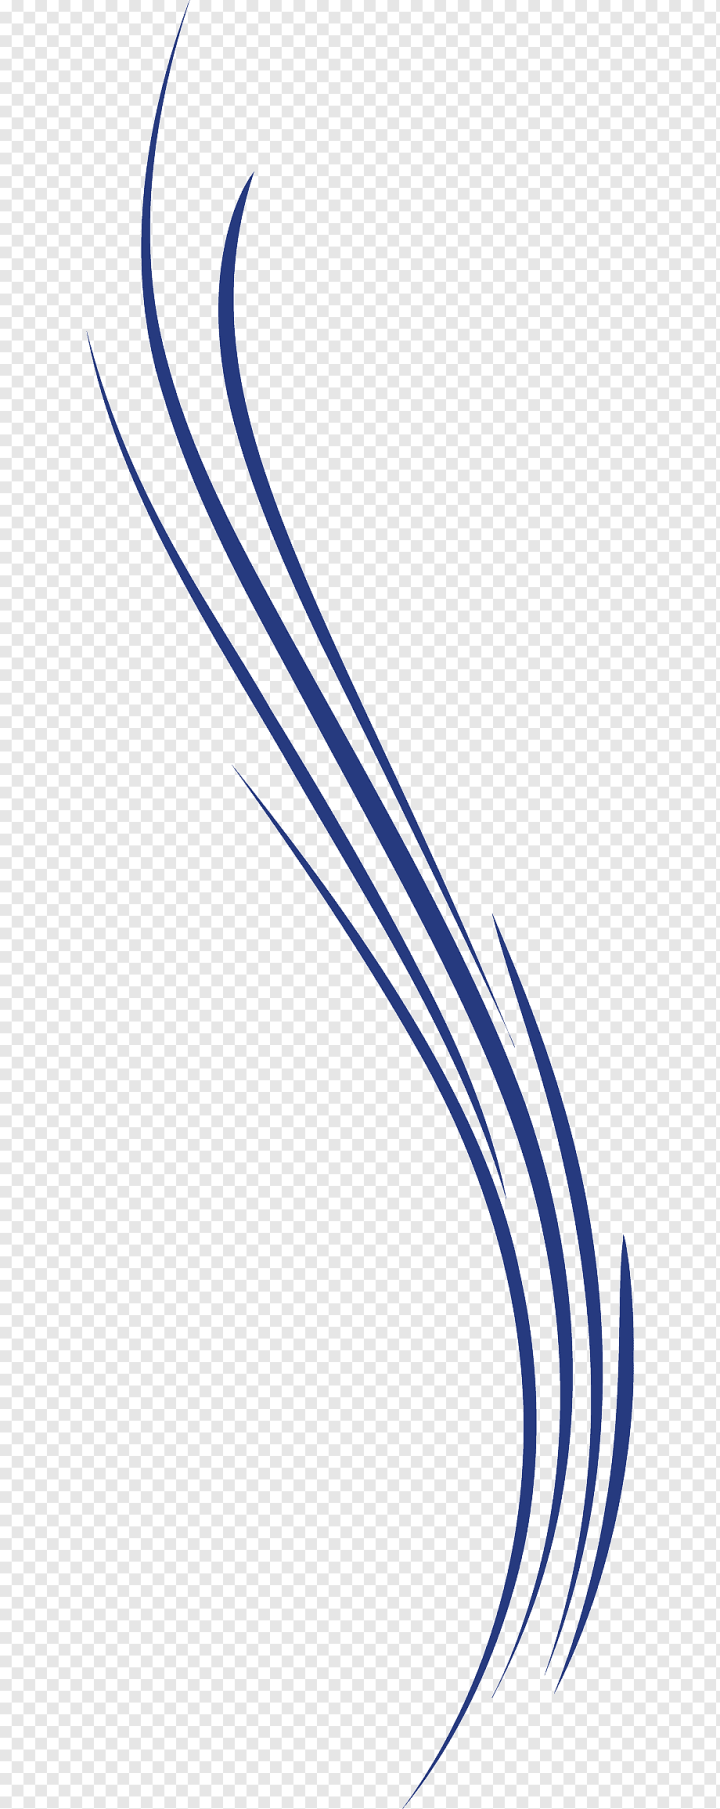 Free: Curve Line Euclidean, Blue curve, blue curved slash illustration ...